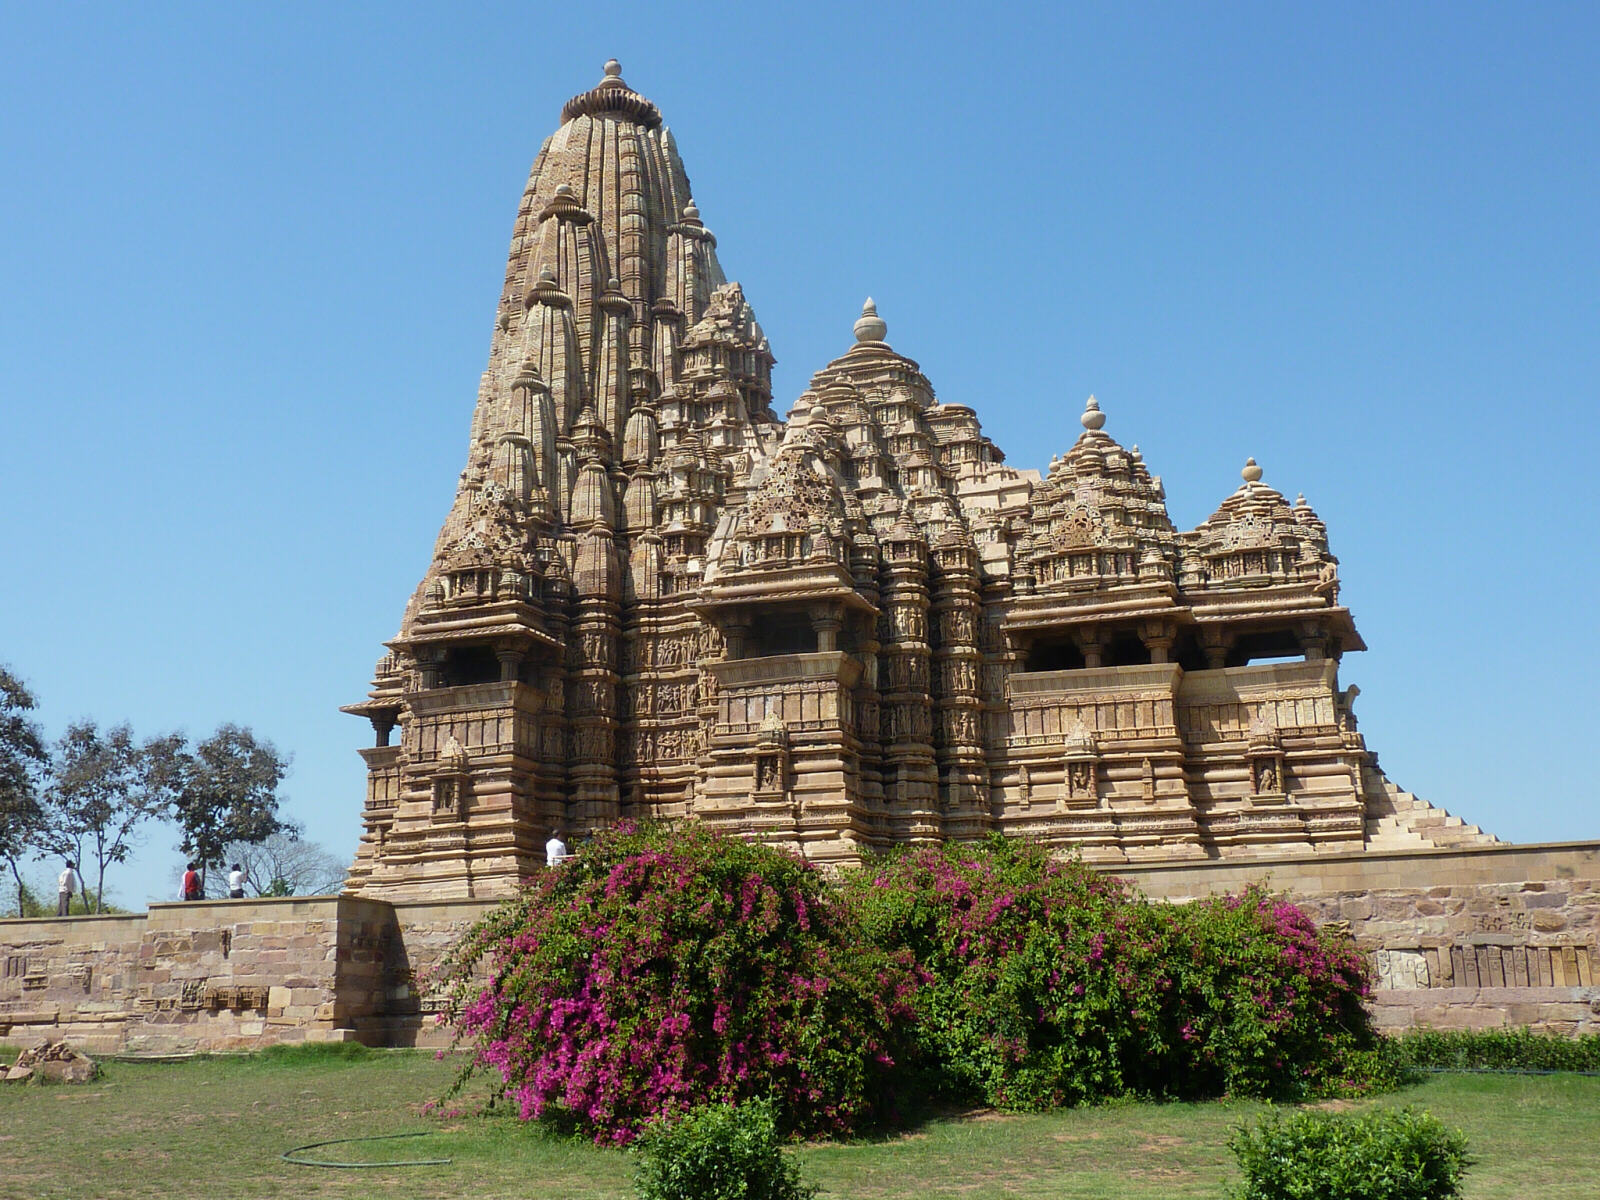 Kandariya Mahadev temple in Khajuraho, India